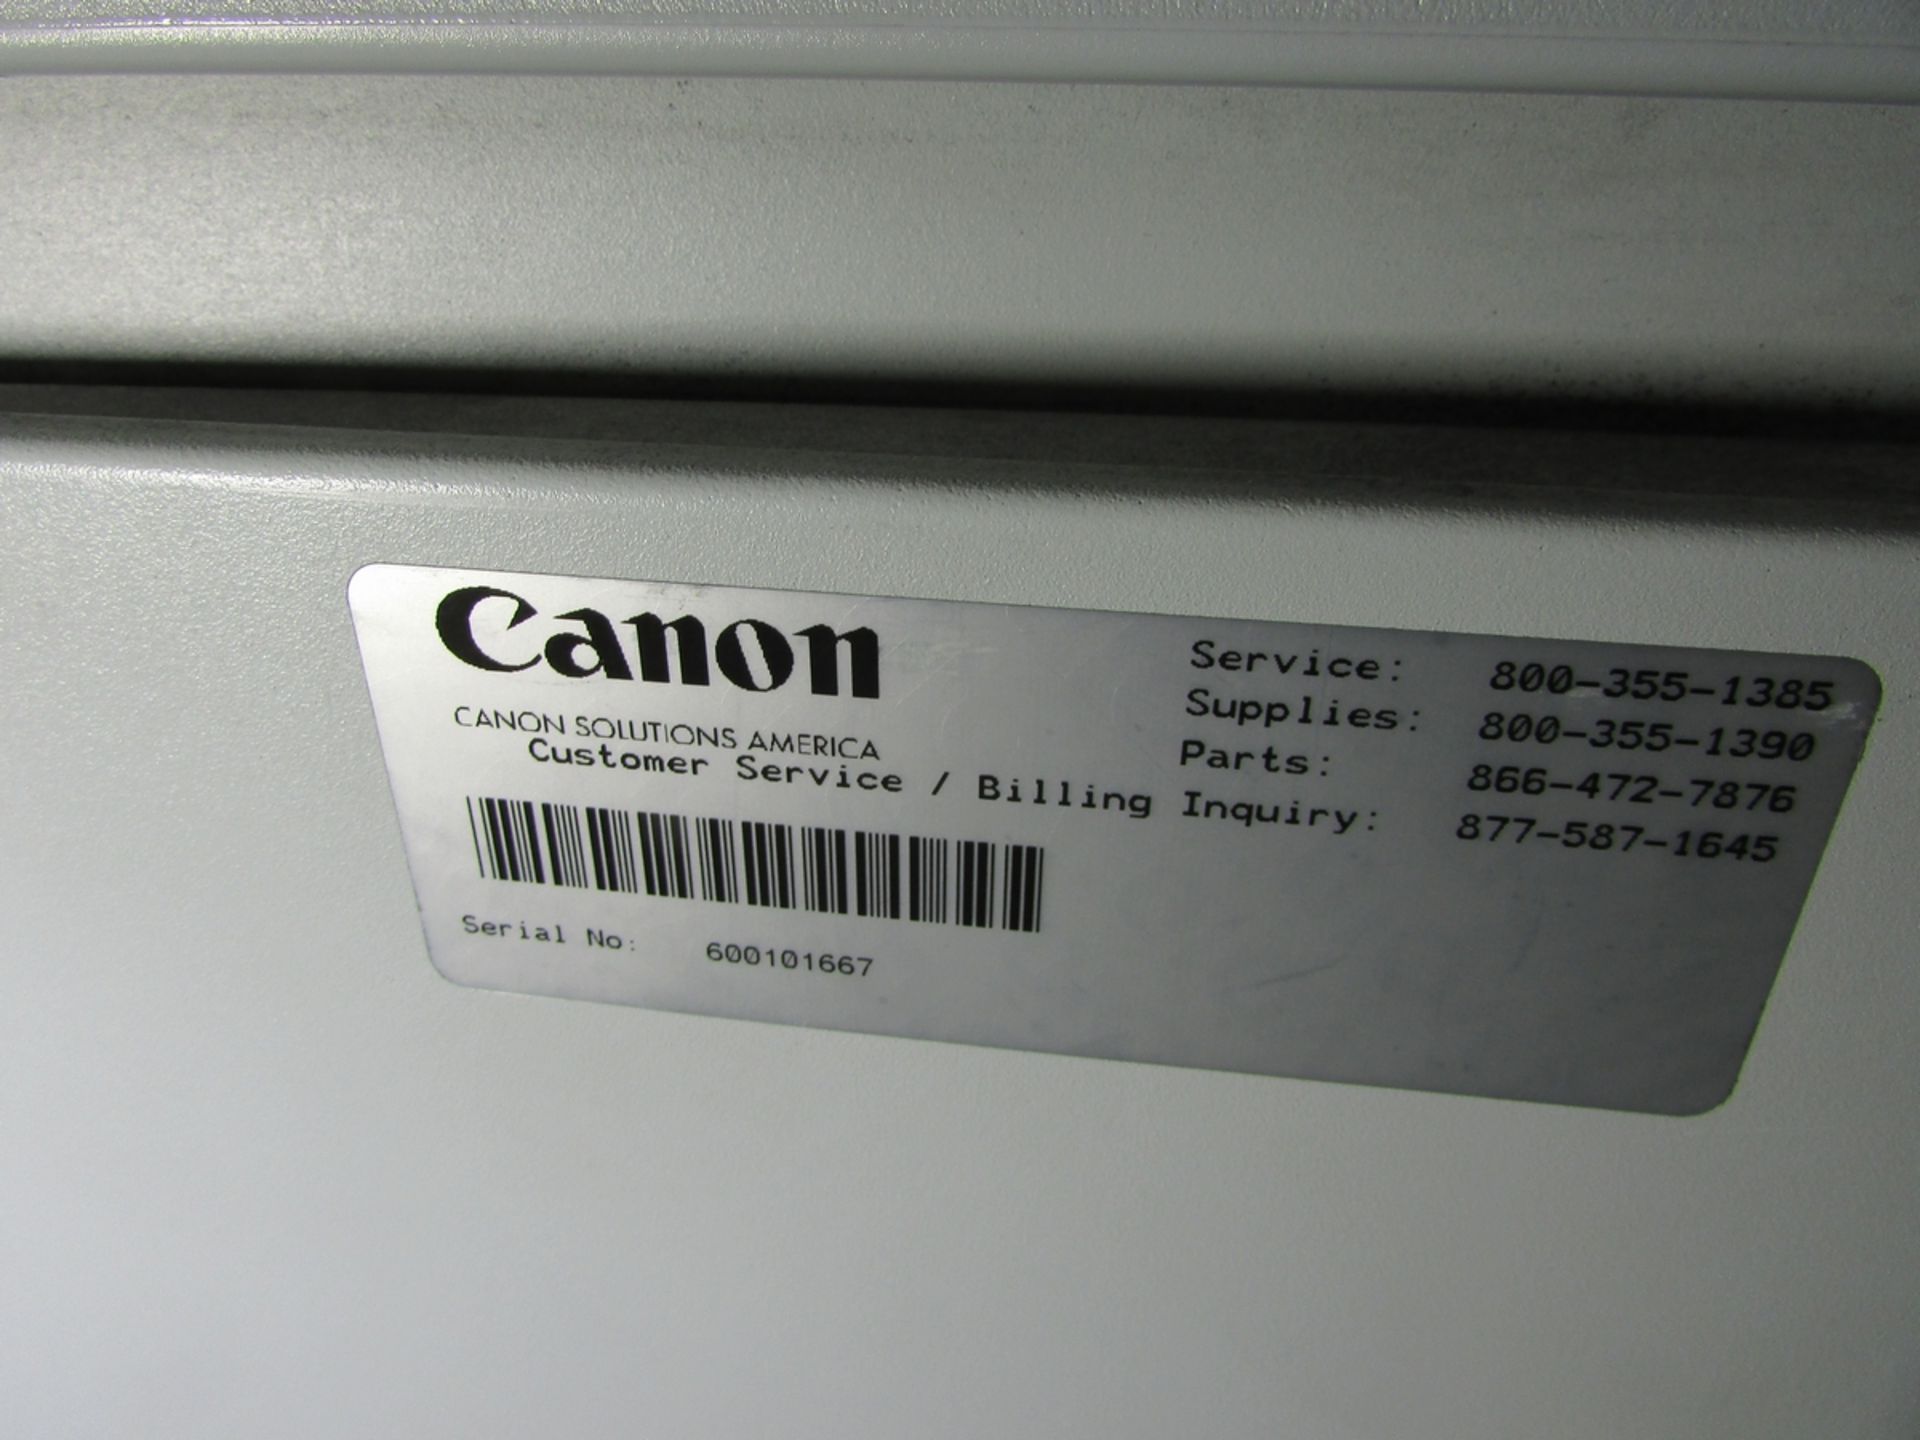 Cannon OCE VarioPrint 6250 Digital B/W Print System - Image 9 of 24